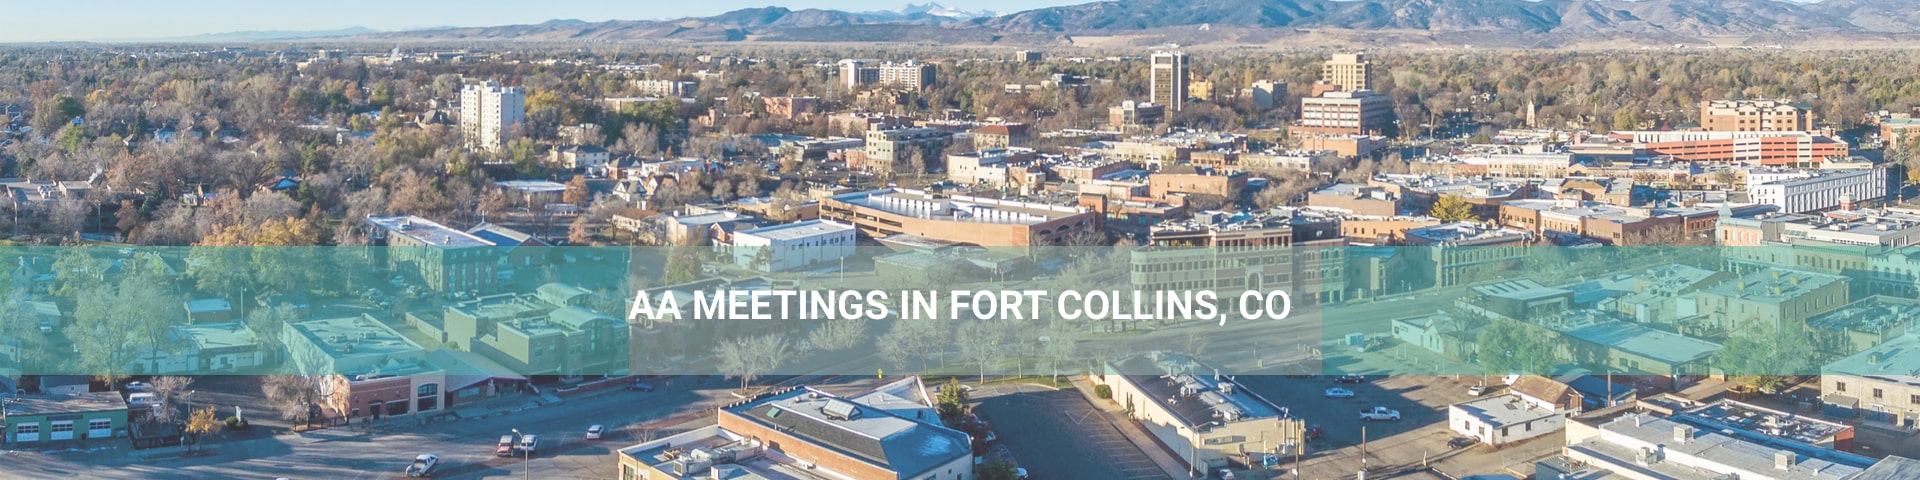 Fort Collins, Colorado city areal vew.